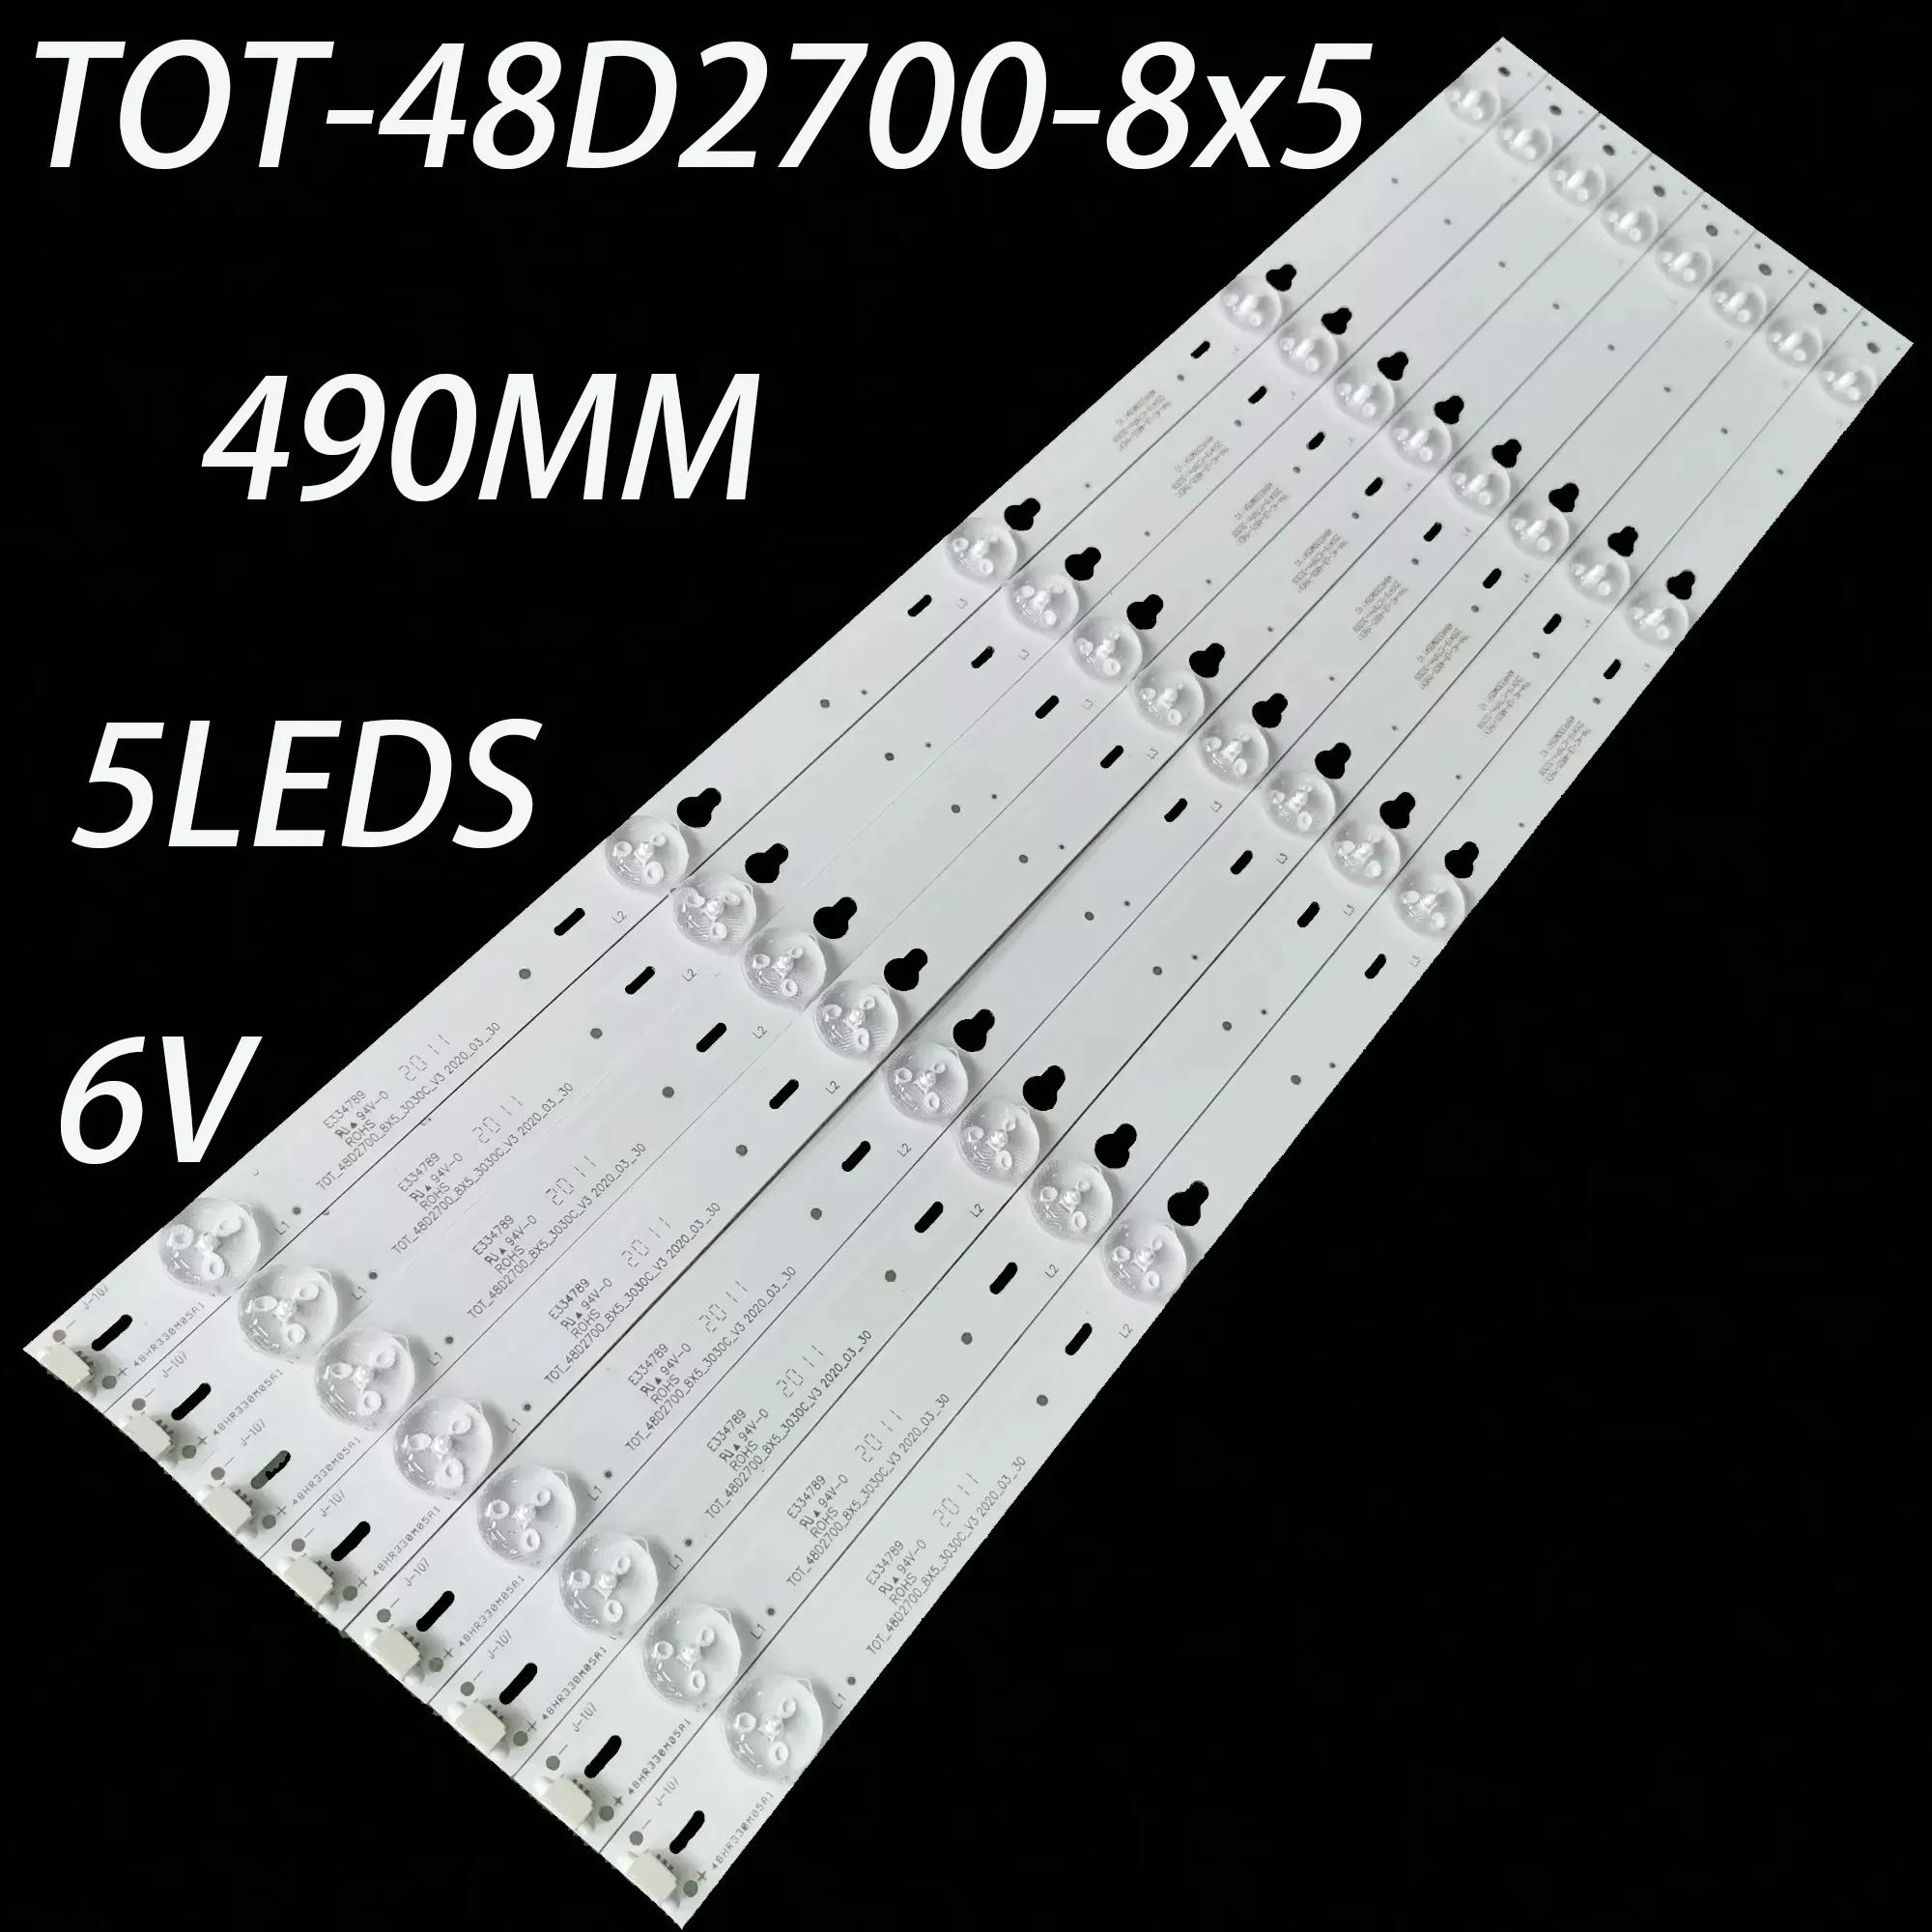 LED TOT-48D2700-8X5, 48D2700-8X5-3030C-V3, D48A810, B48A558U, B48U828U, U838U, Lb4805, L48S4700FS, L48S4700, 48cf262